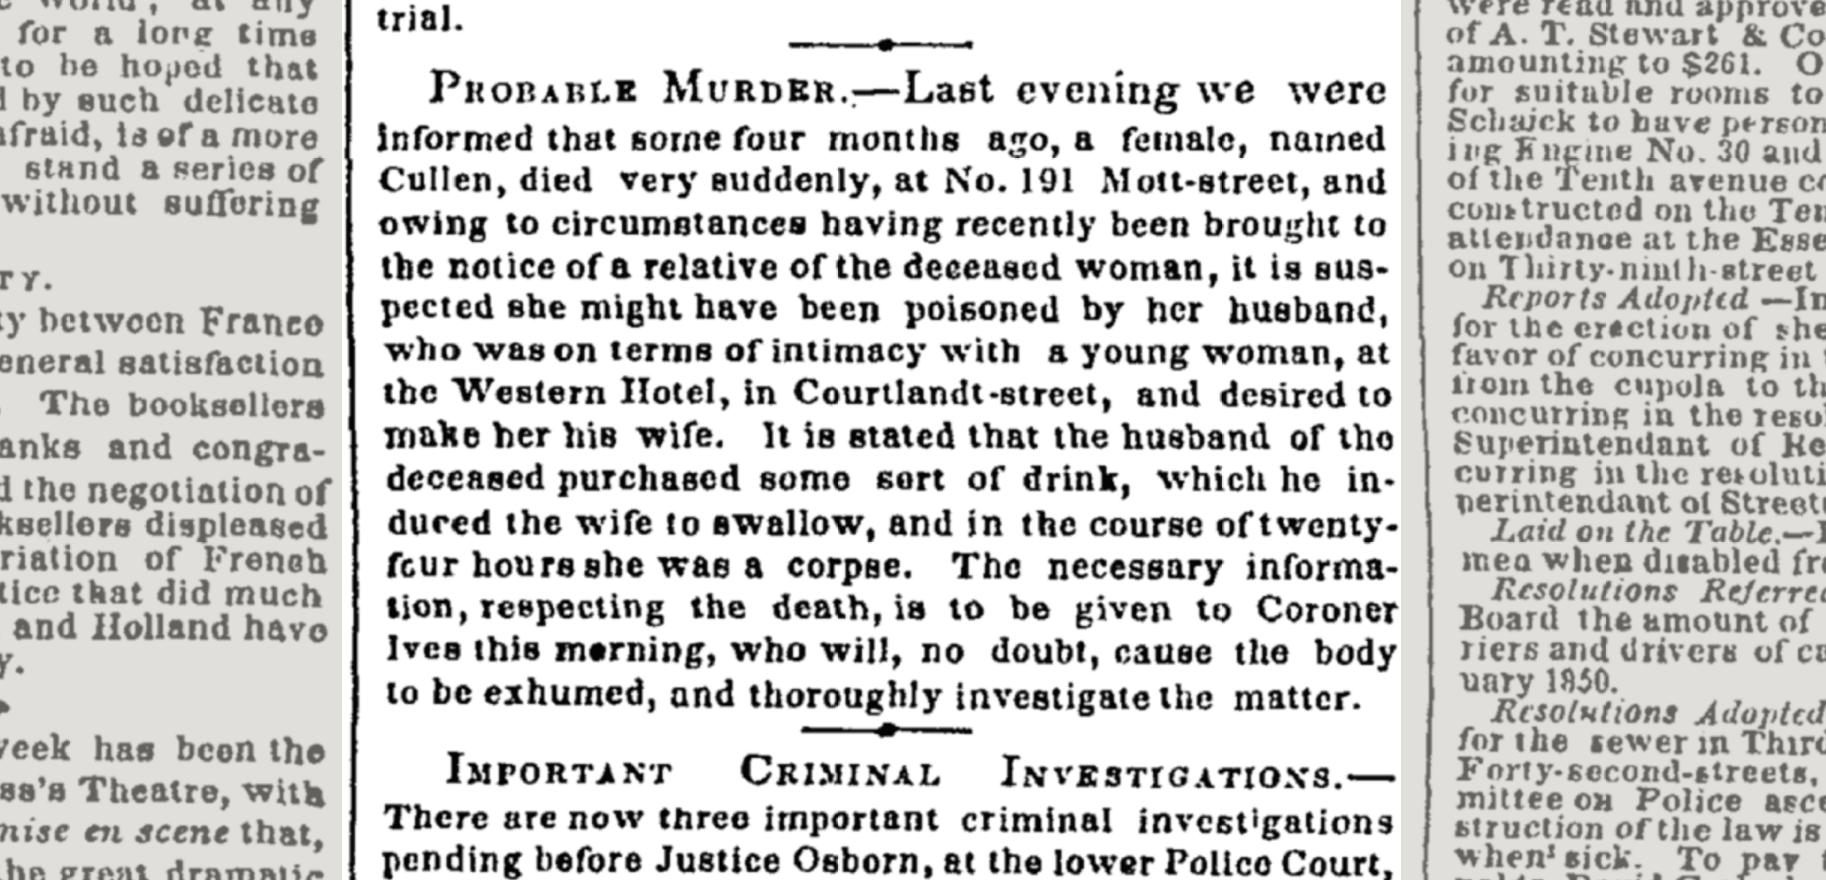 image foil-request-1852-probable-murder.jpg